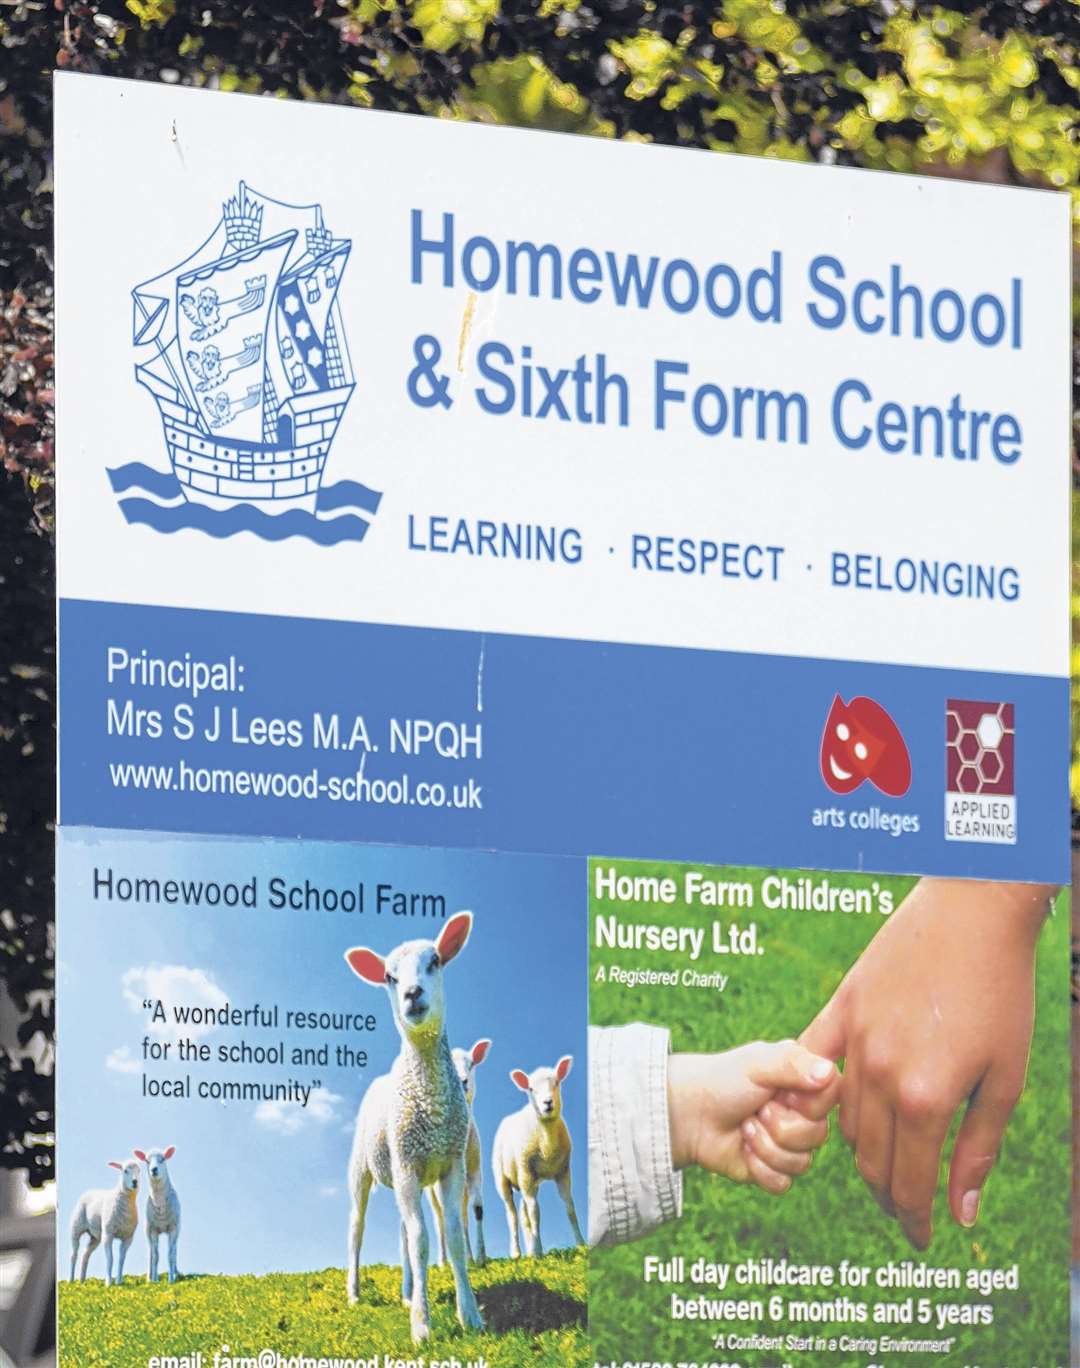 The Homewood School sign